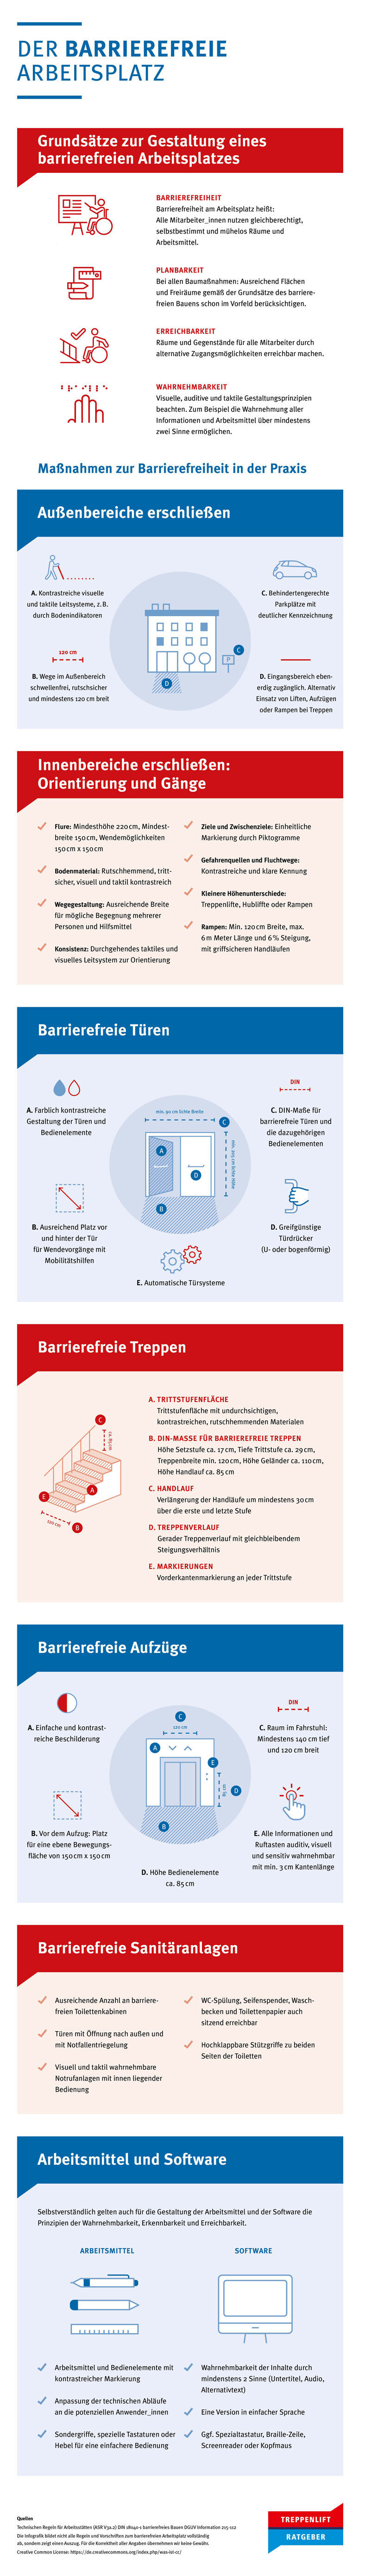 Infografik barrierefreier Arbeitsplatz